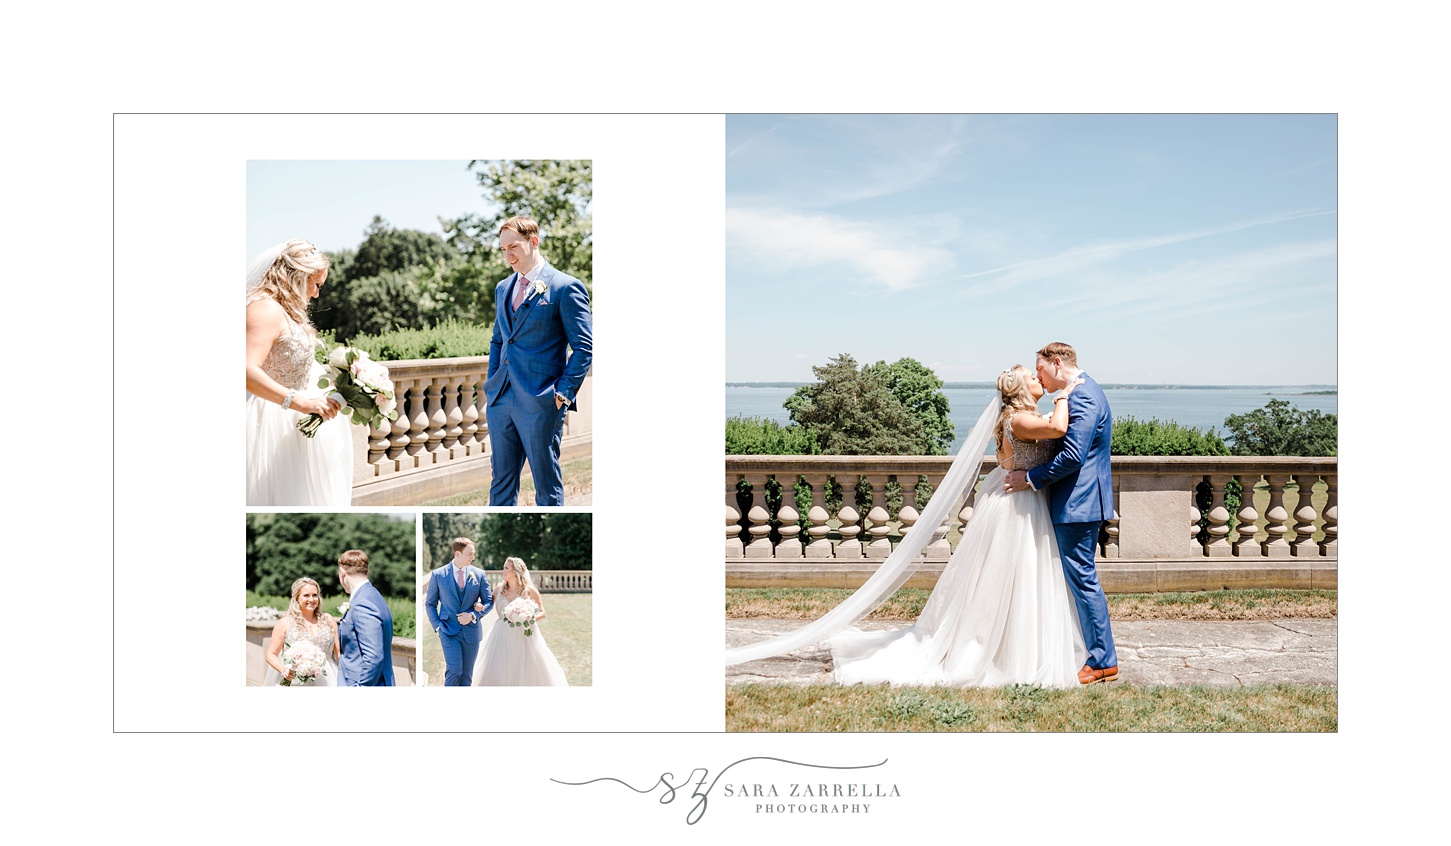 summertime Aldrich Mansion wedding storybook album designed by RI wedding photographer Sara Zarrella Photography